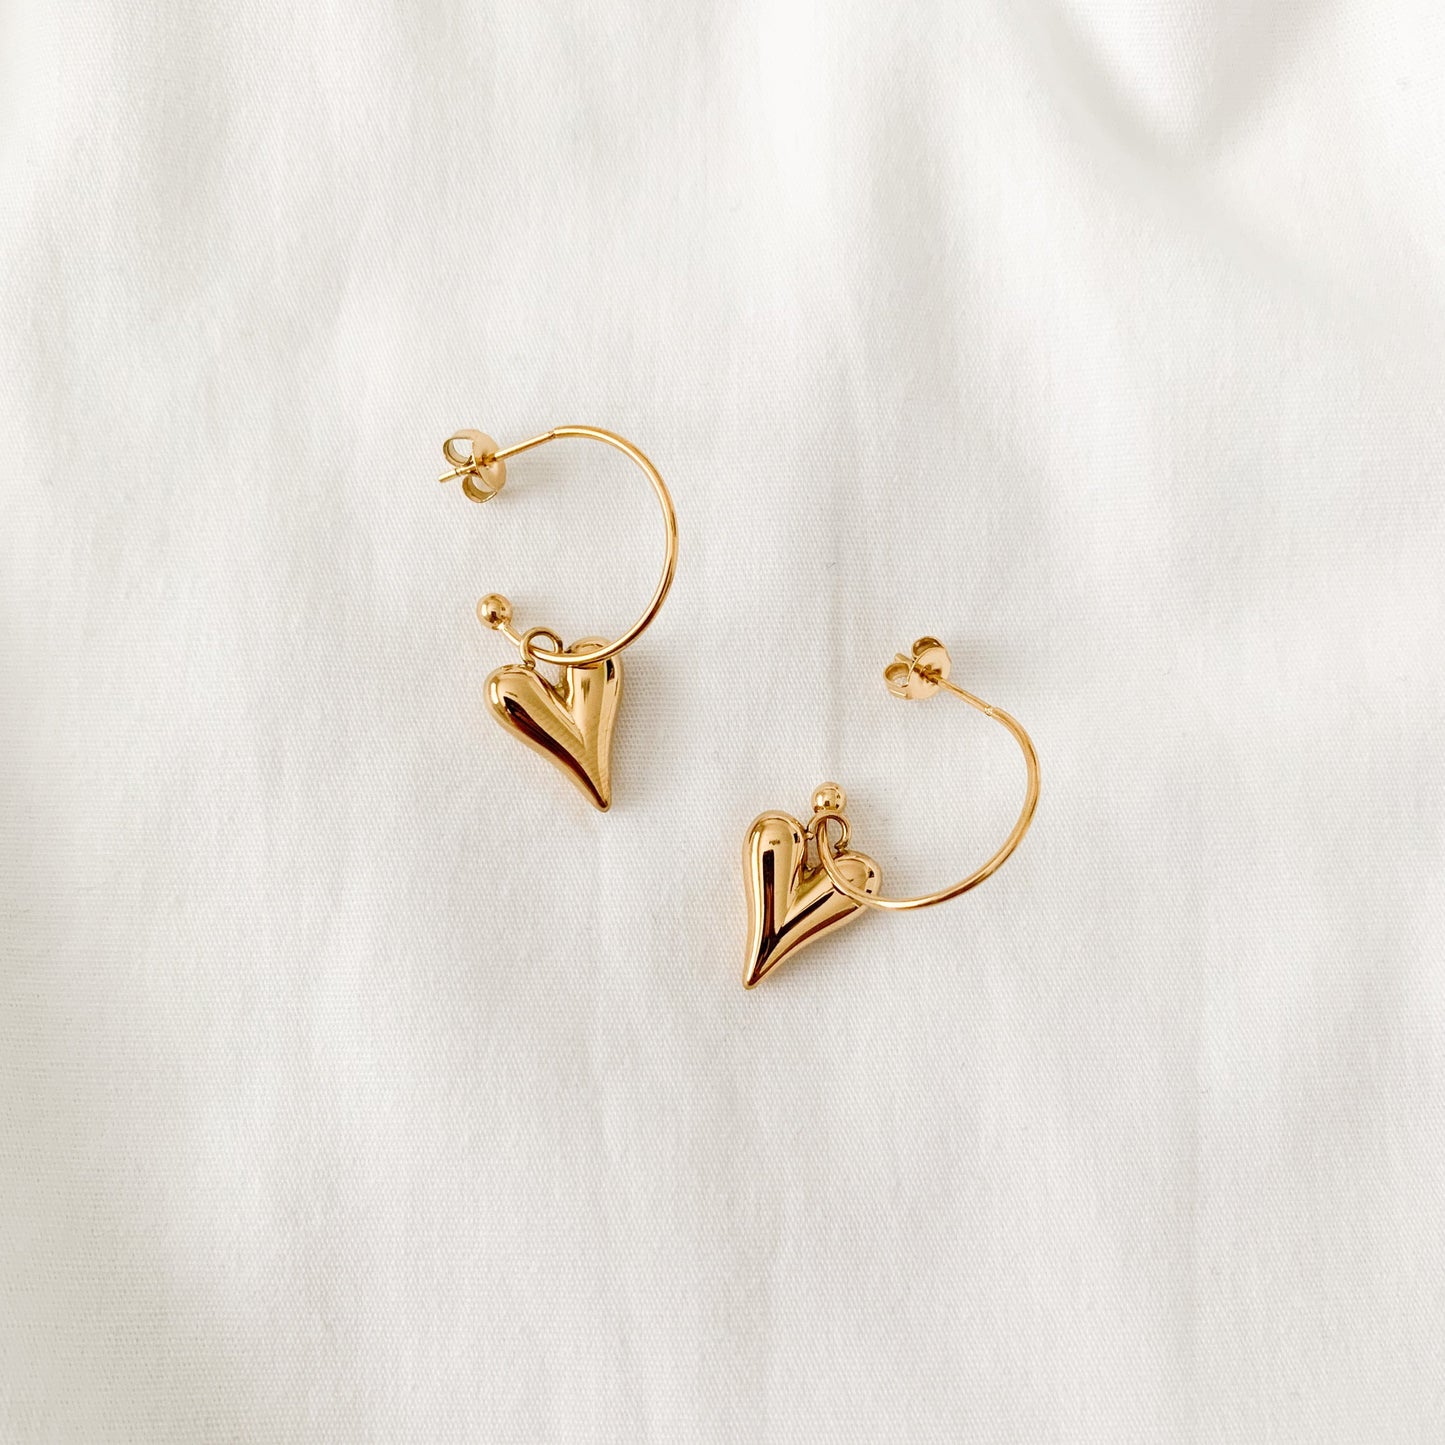 Hart aka Heart Earrings - Namaste Jewelry Canada